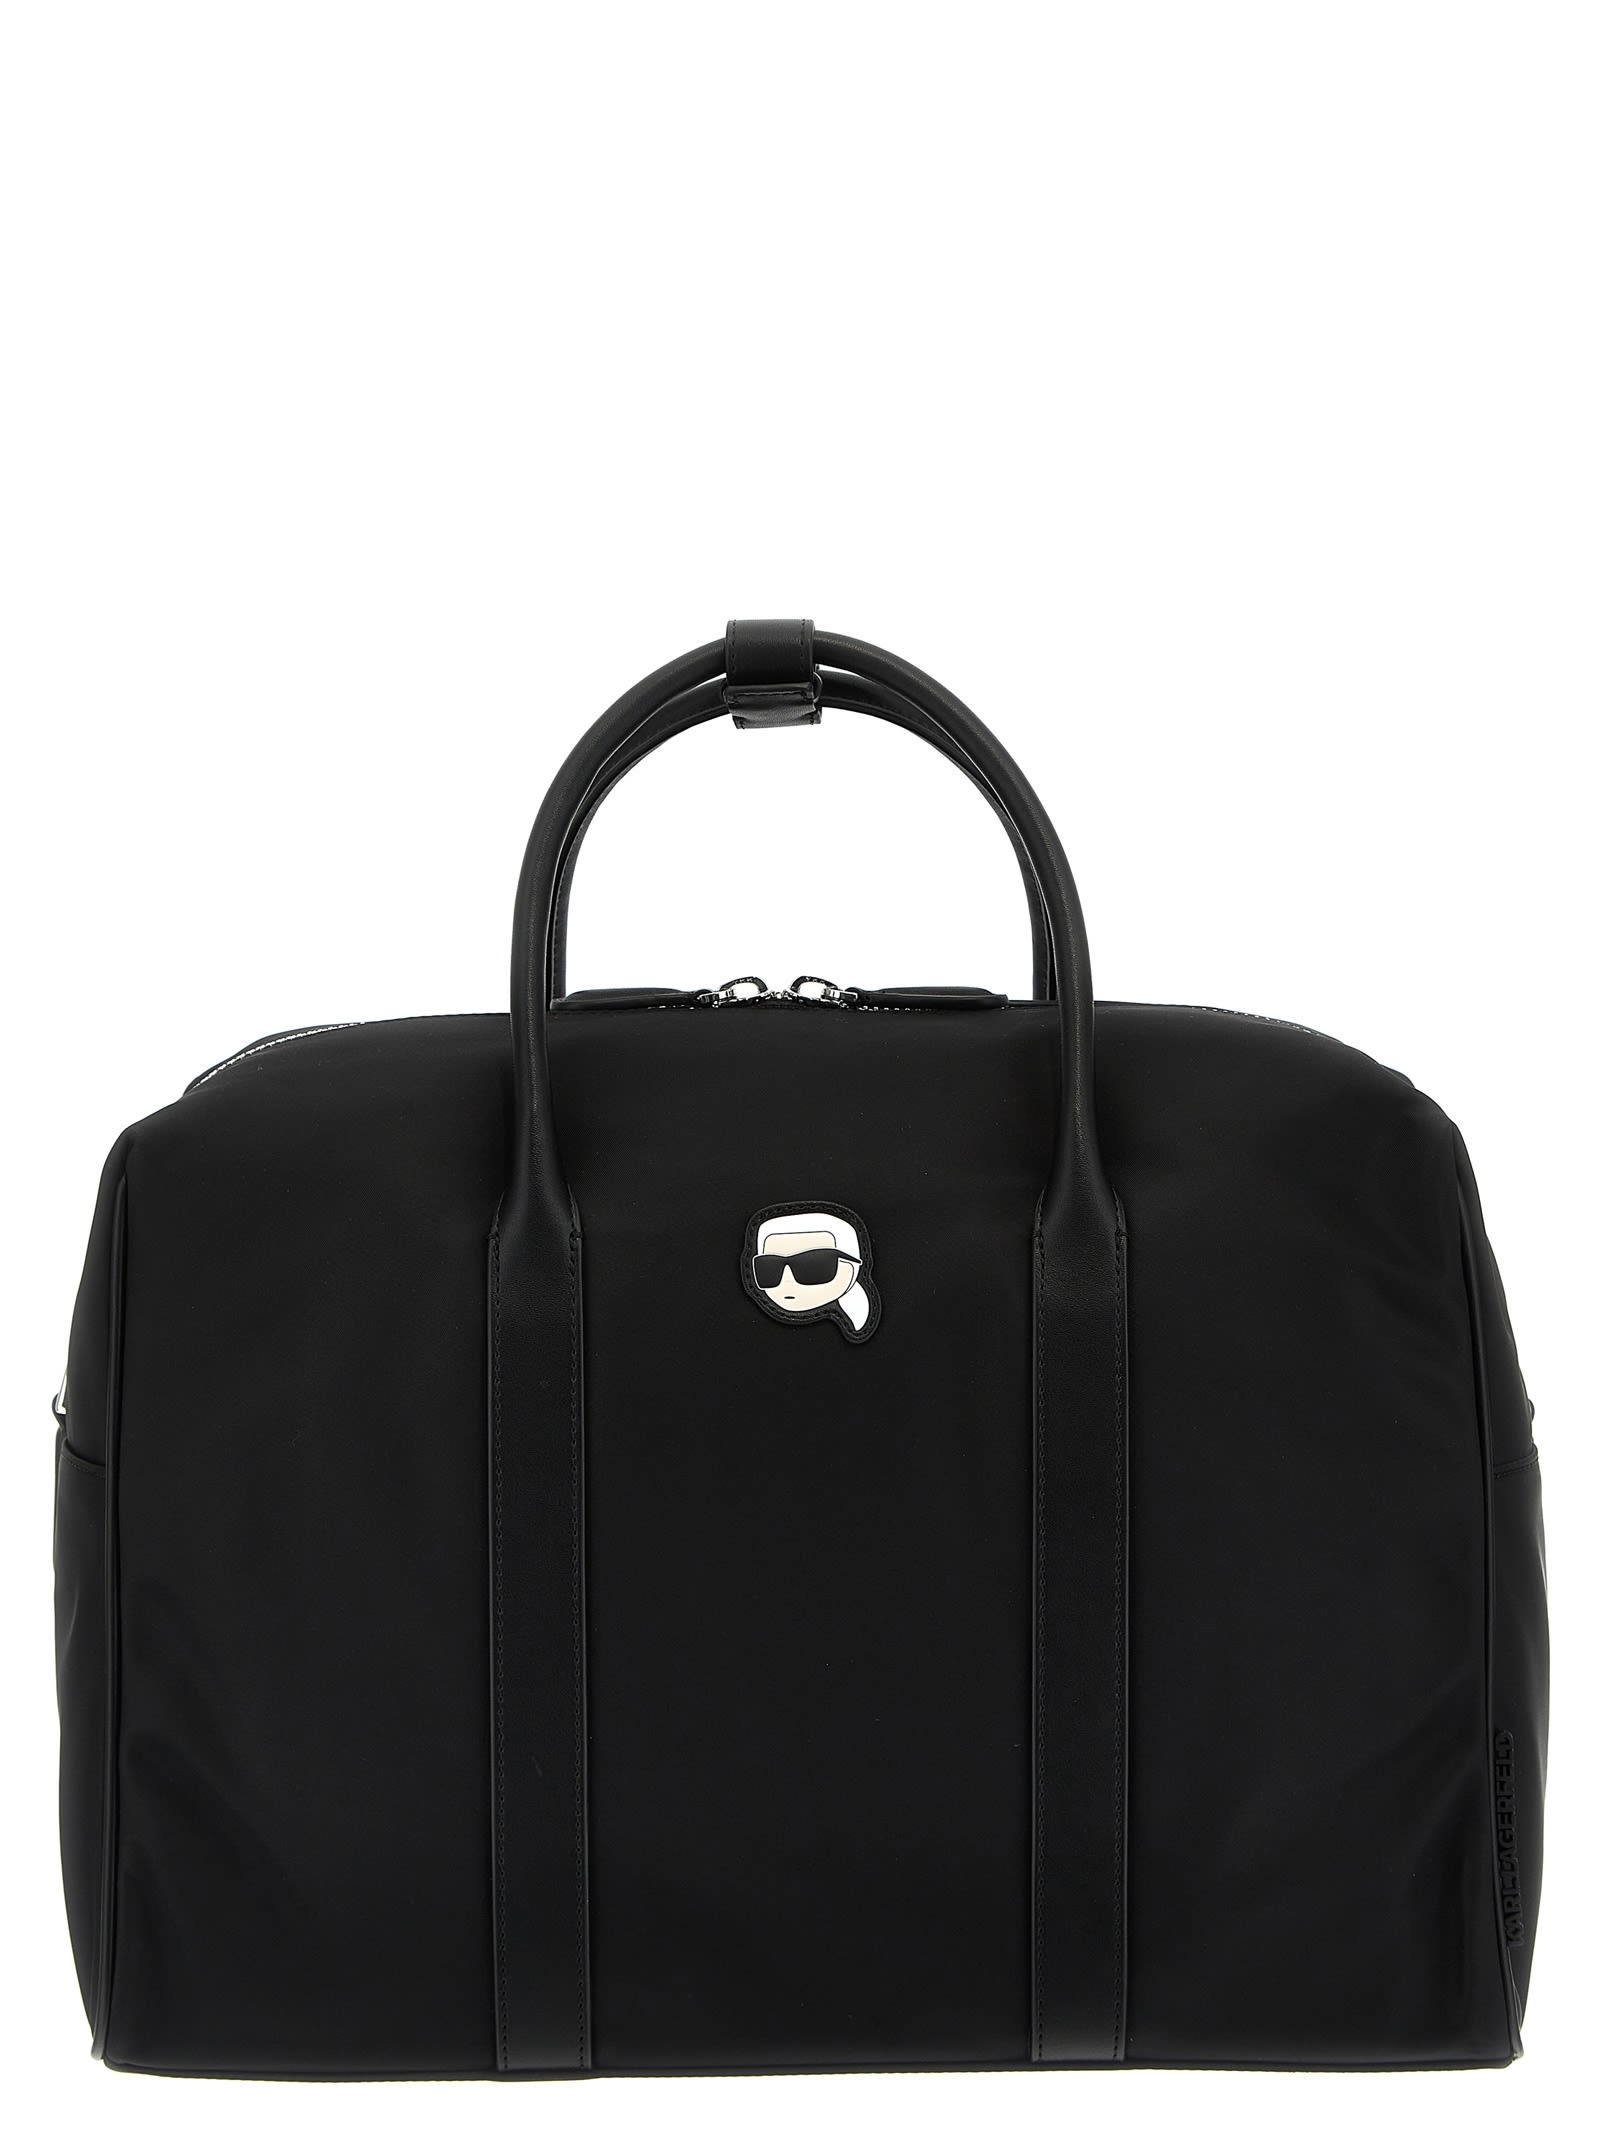 Karl Lagerfeld k/ikonik Duffel Bag